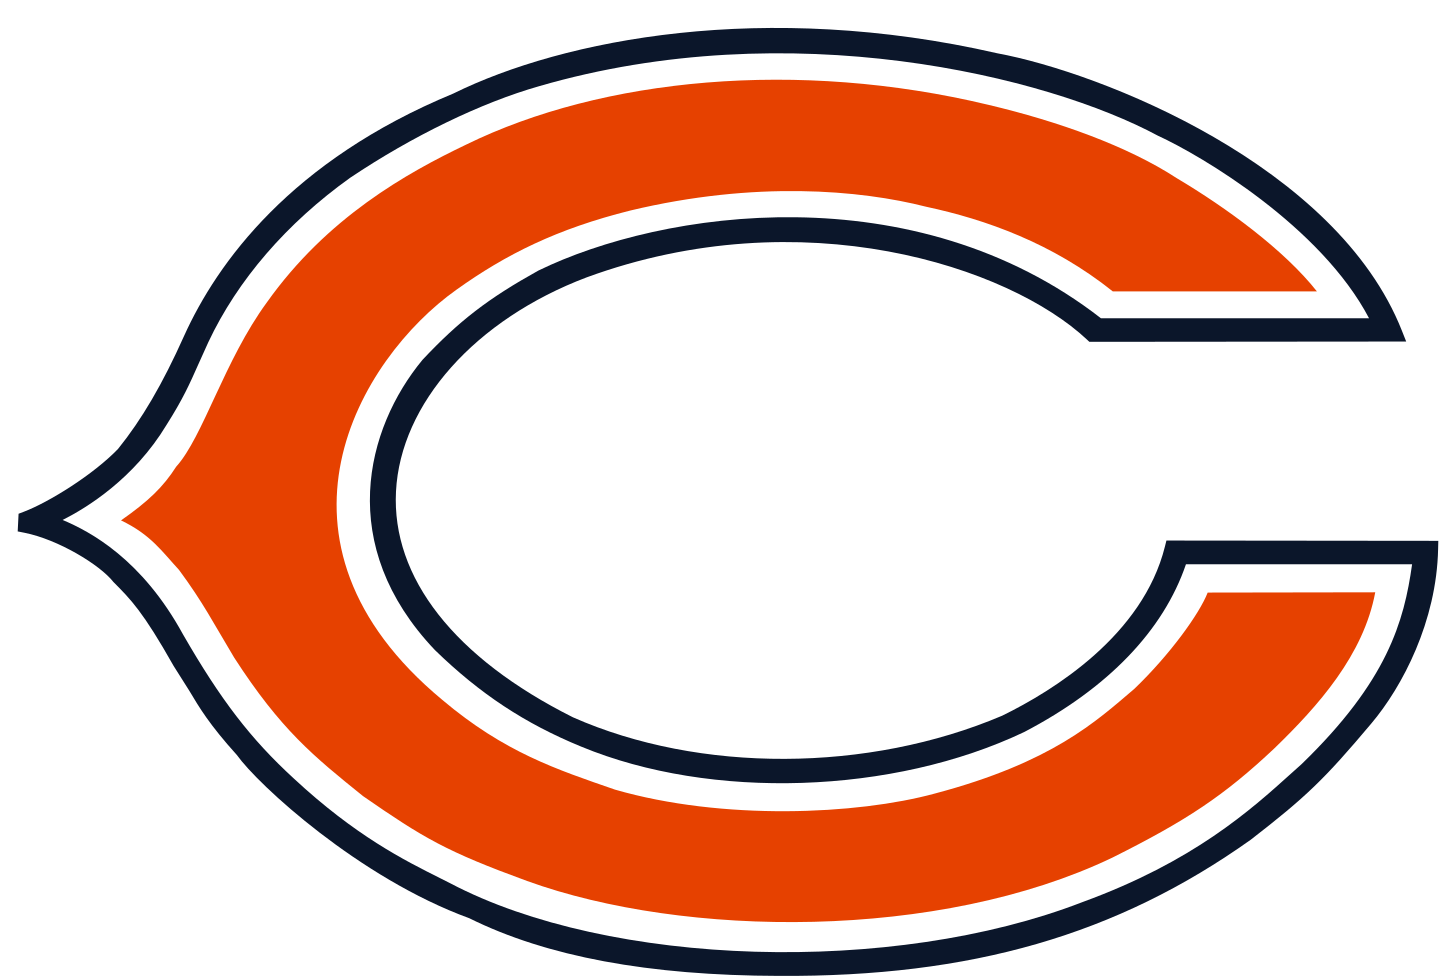 Chicago Bears Logo Vector Logo - Download Free SVG Icon | Worldvectorlogo